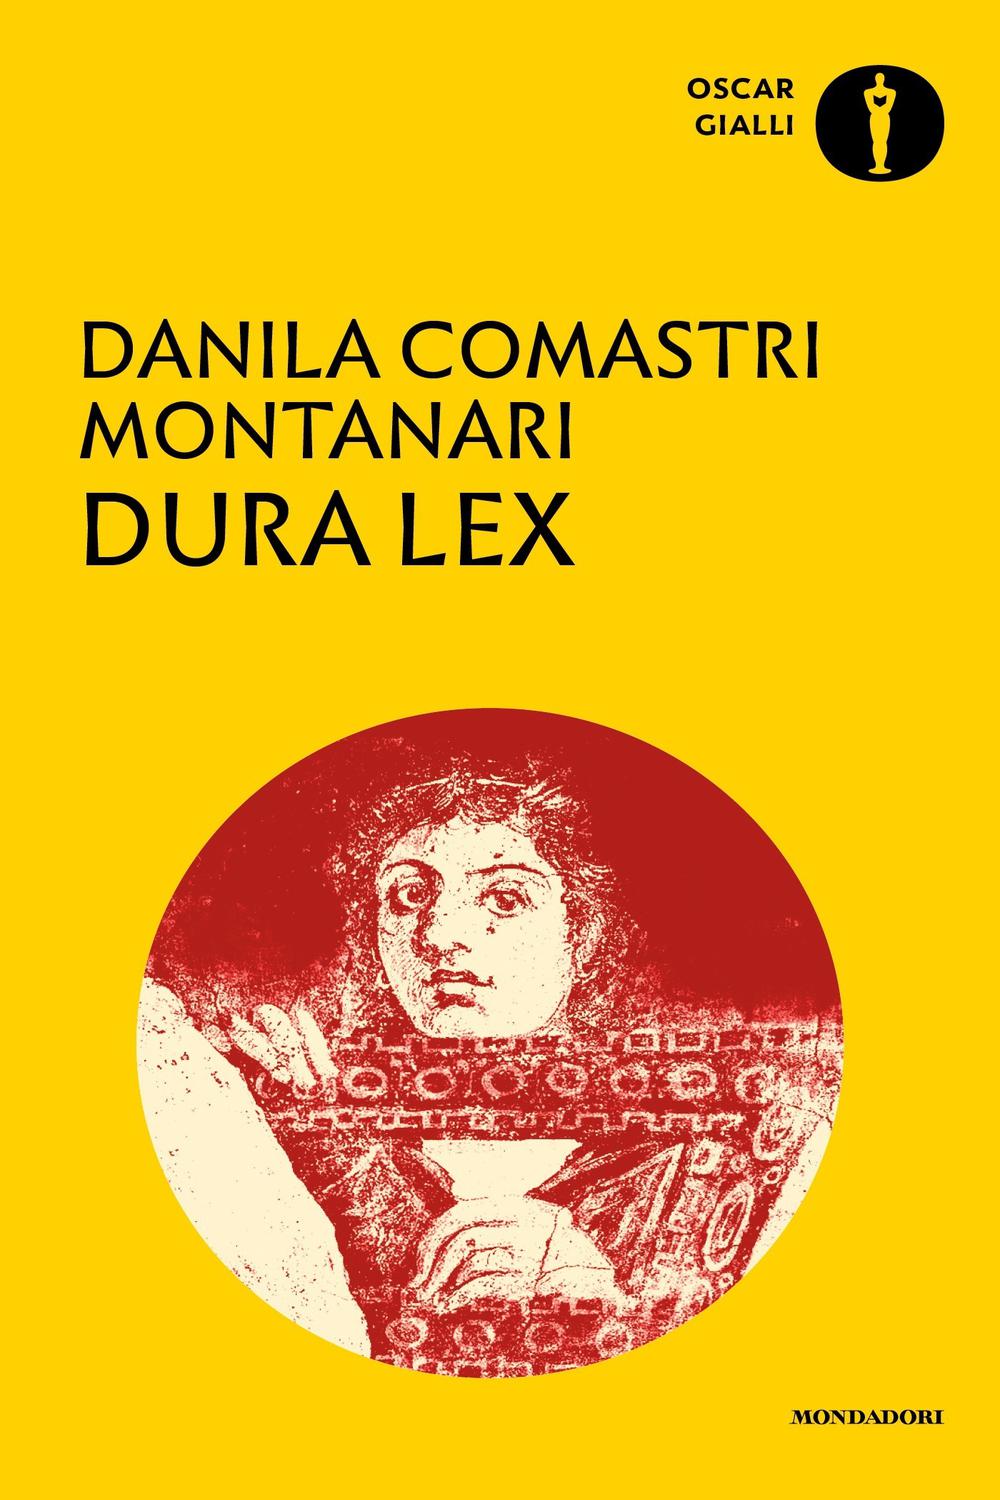 Dura lex - Danila Comastri Montanari,,